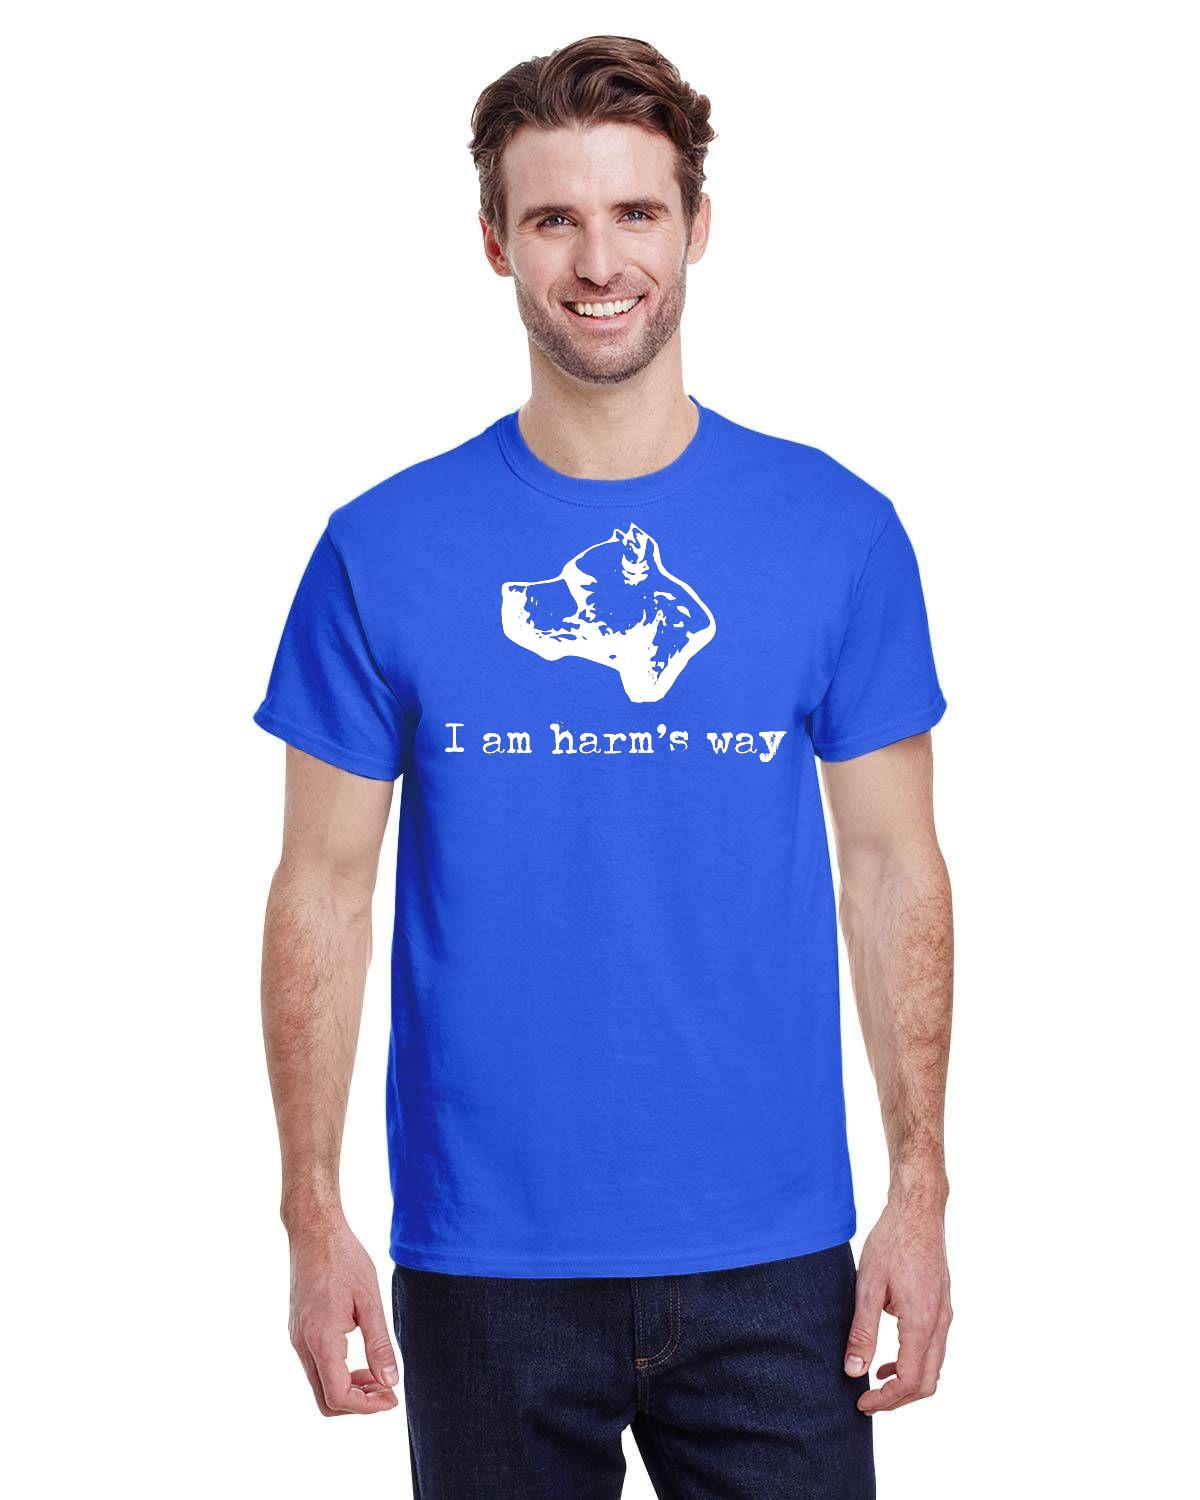 CDAC "I Am Harm's Way" Dark Colour Adult t-shirt